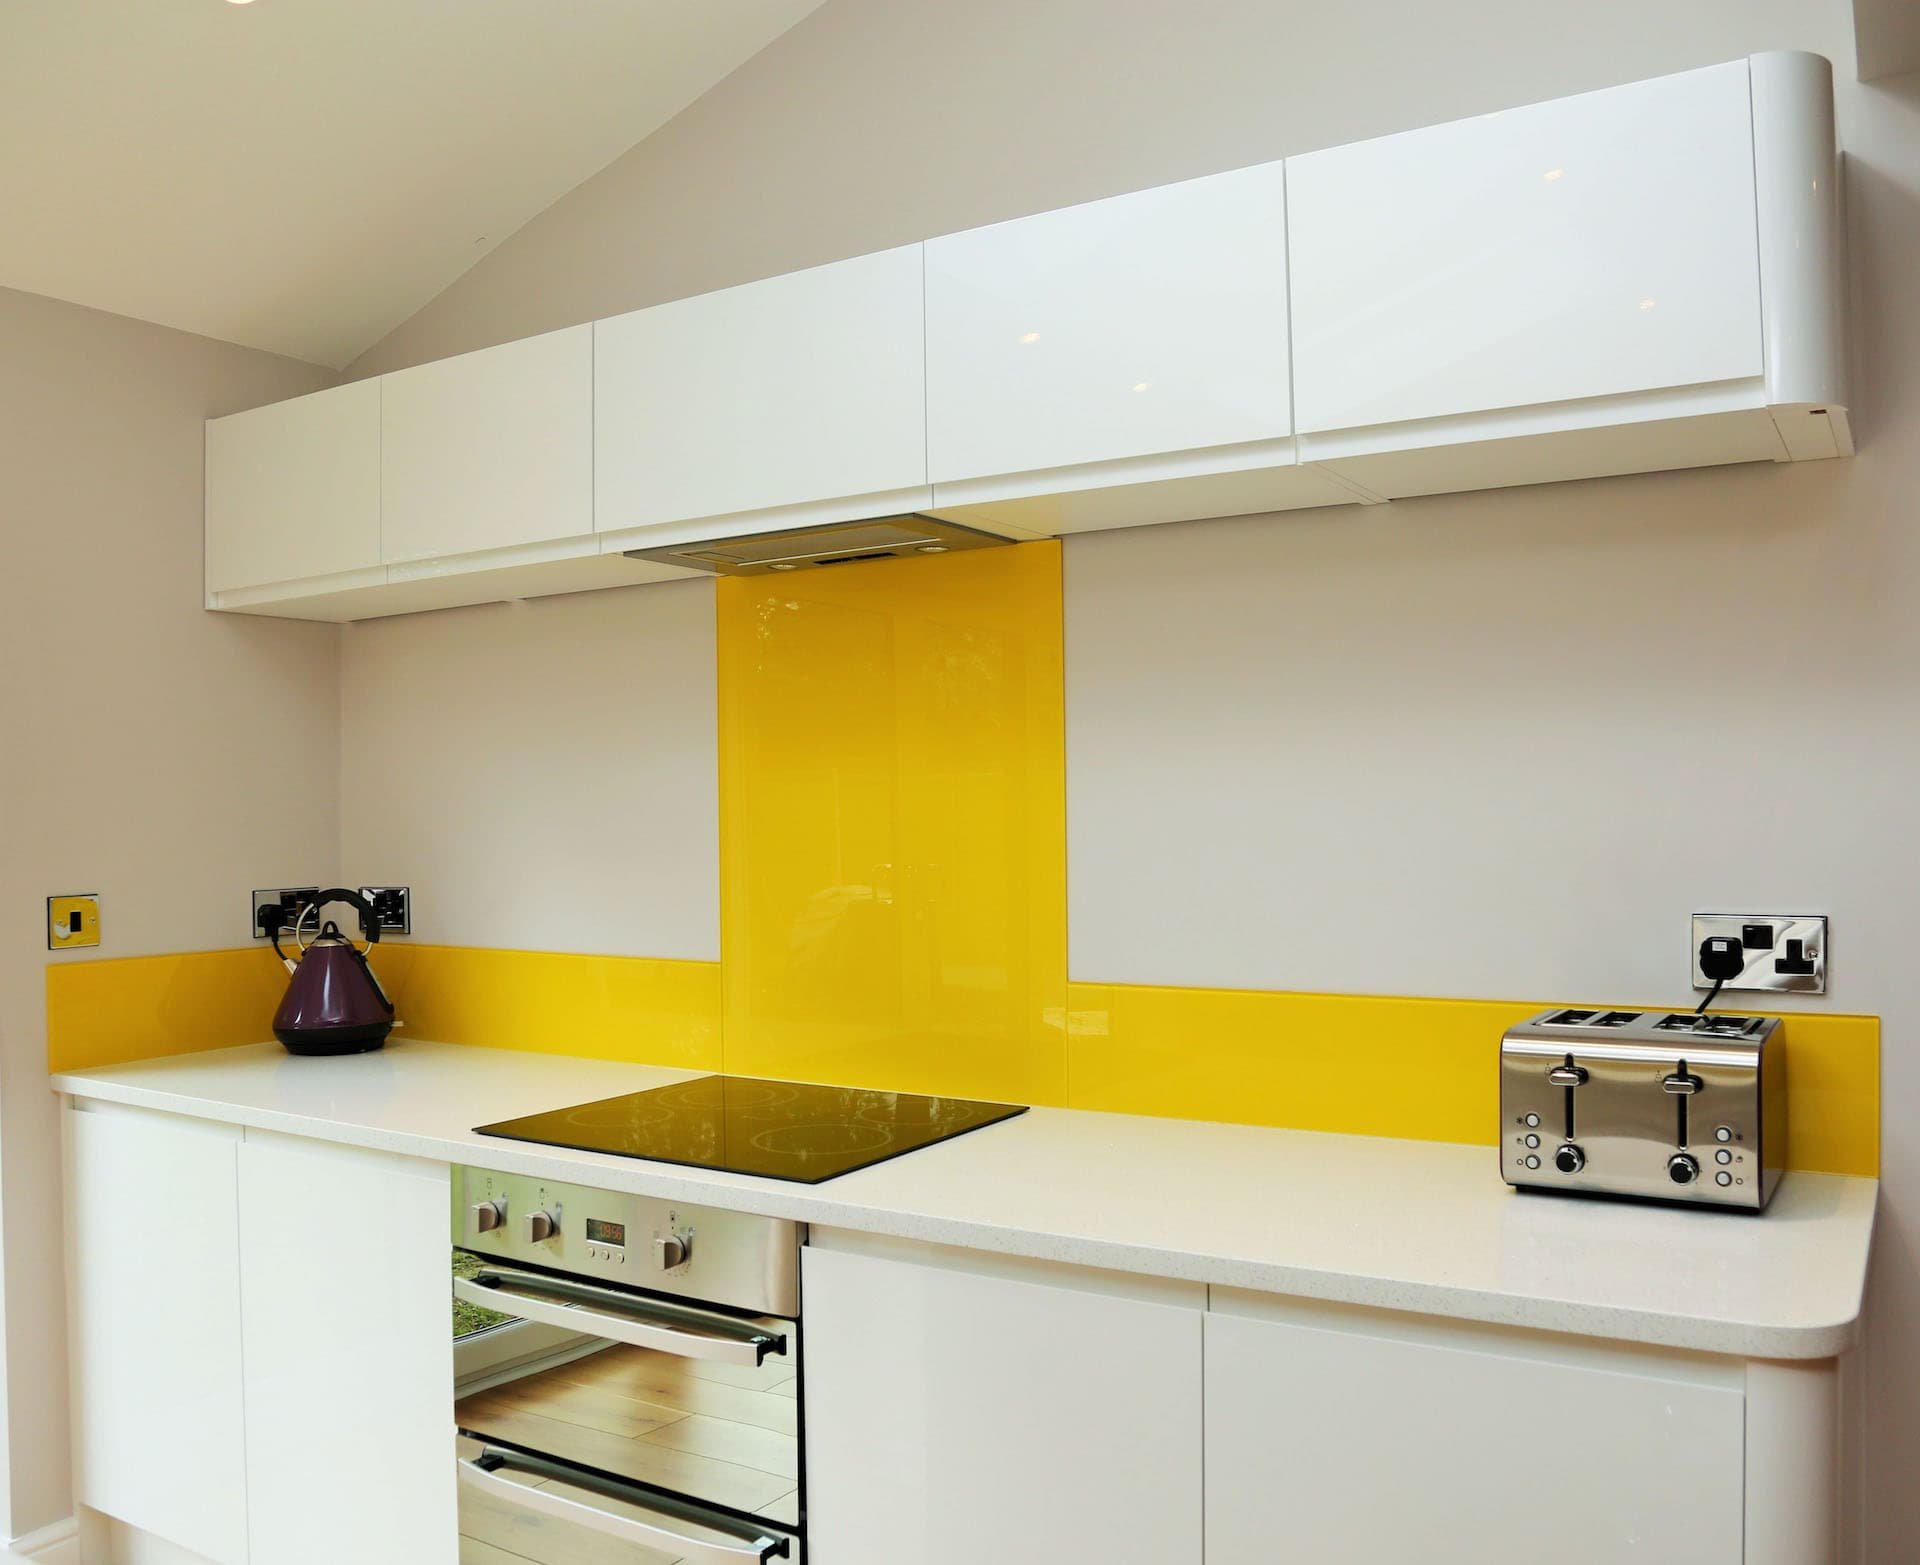 Кухонный гарнитур с желтым фартуком.